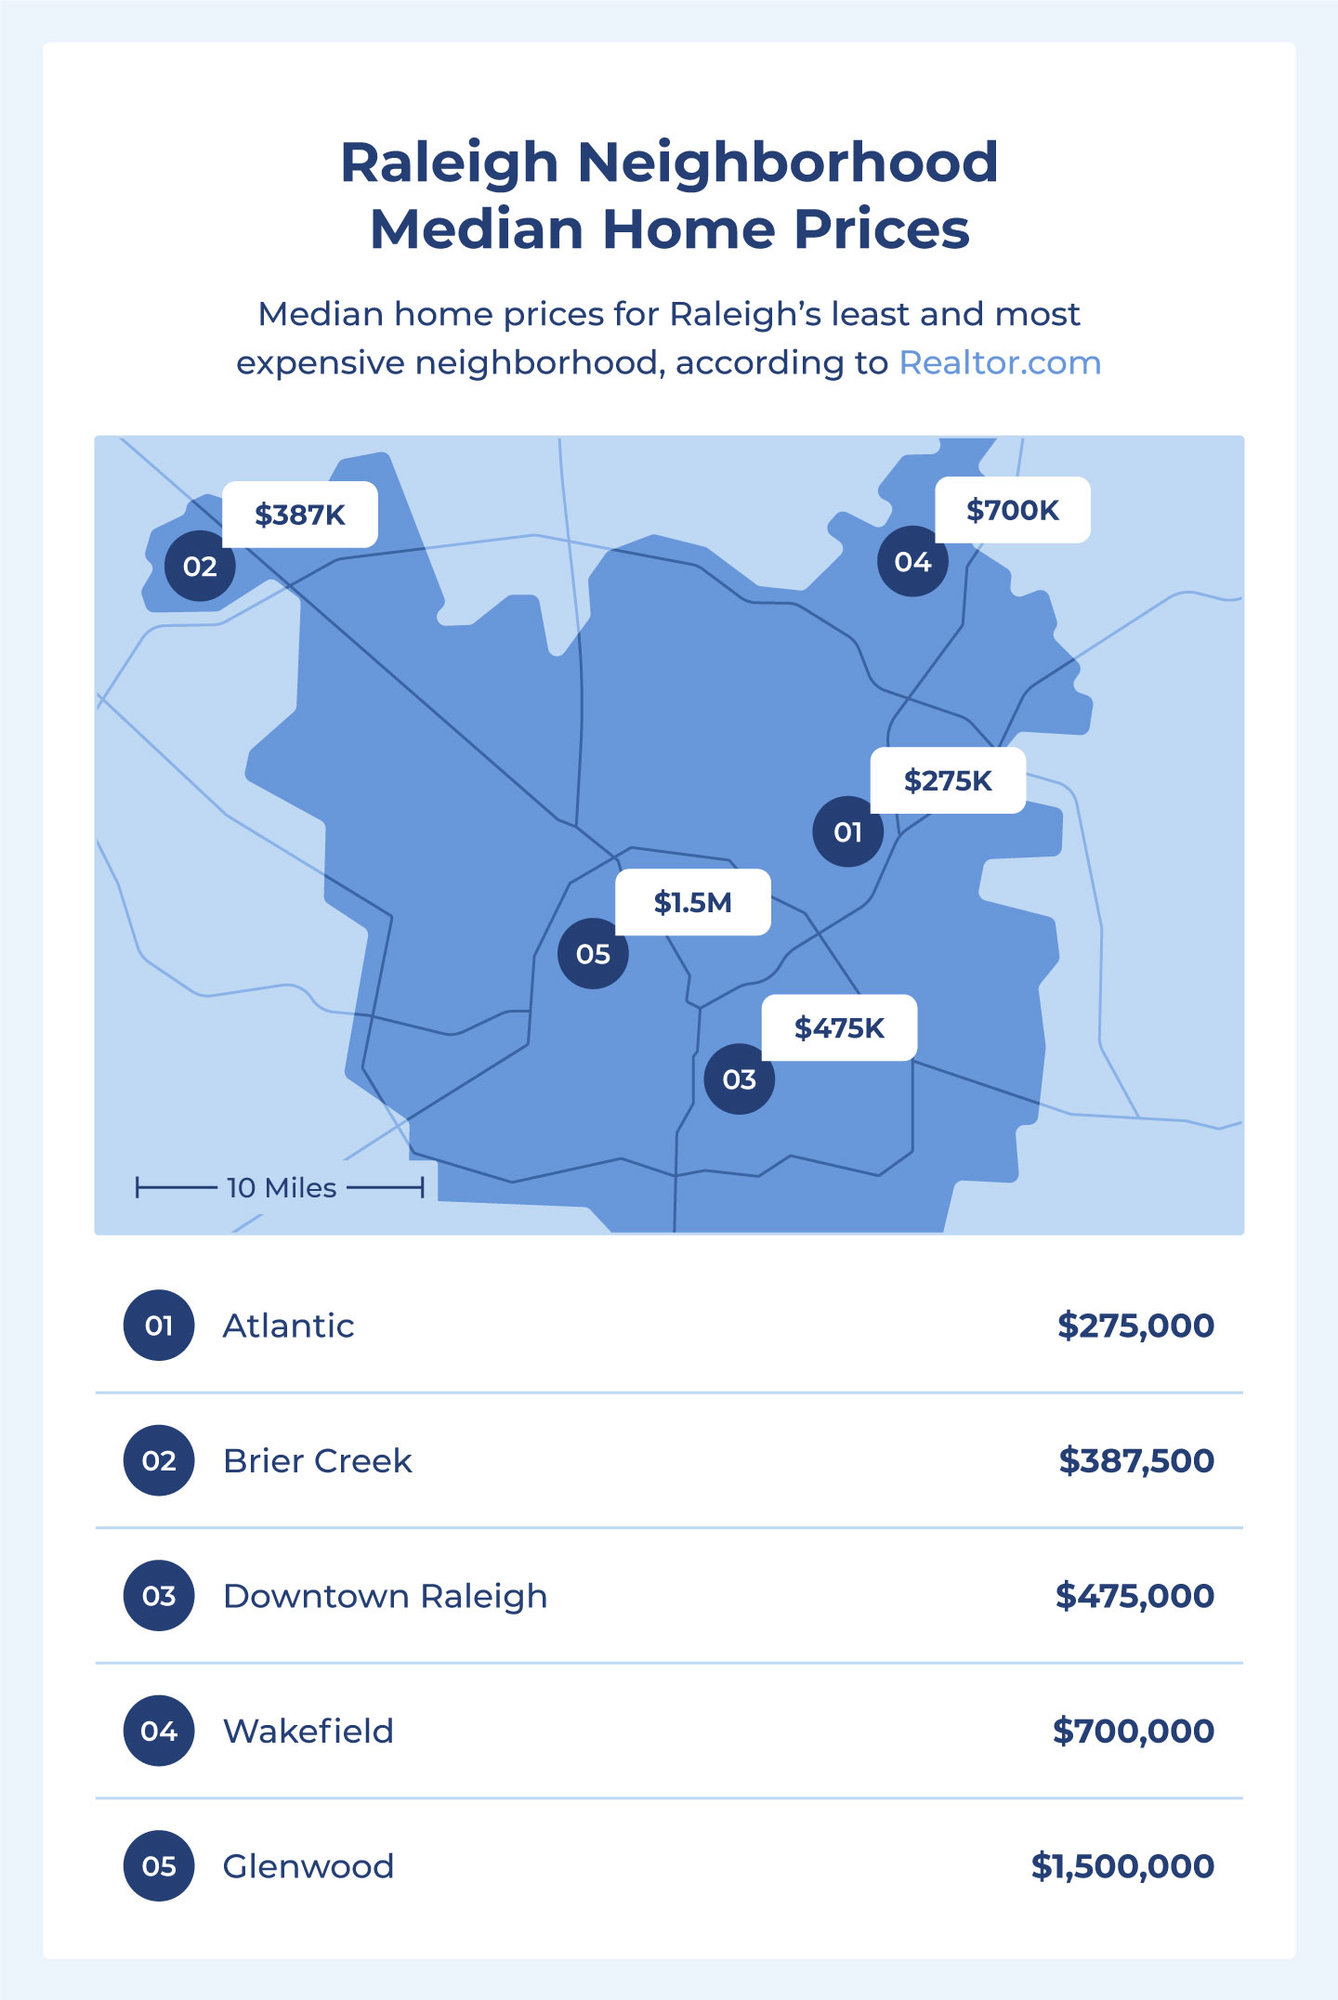  In Atlantic, Raleigh’s least expensive neighborhood, the median home price is $275,000. In Glenwood, Raleigh’s most expensive neighborhood, the median home price is $1.5 million.